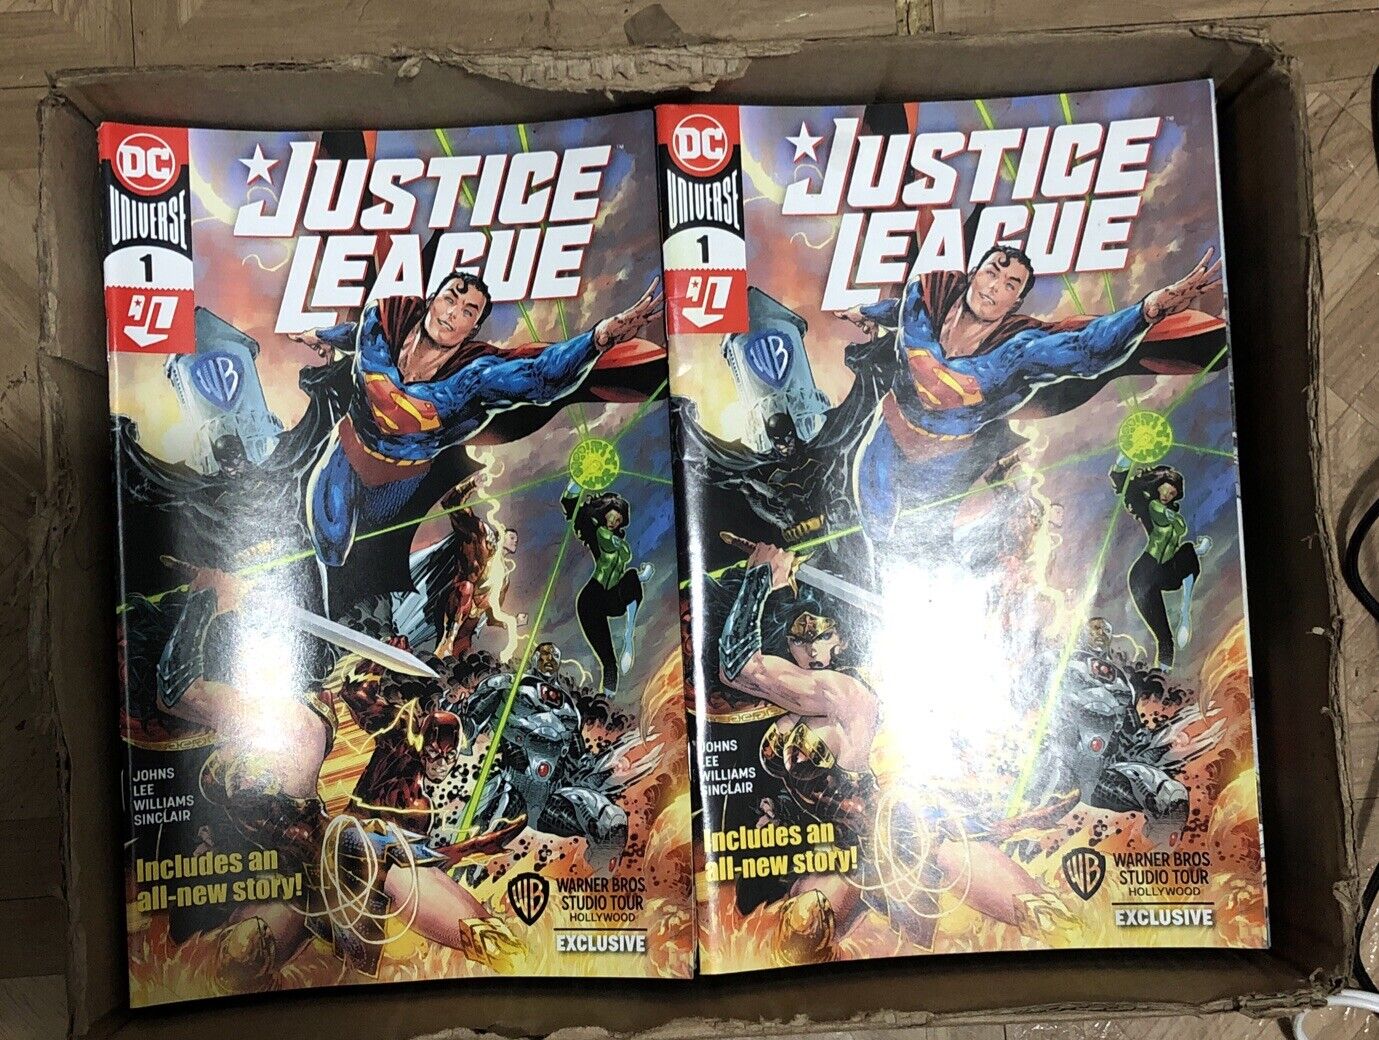 Justice League #1 DC Comics New 52 March 2013 Warners Bros. Studio Exclusive